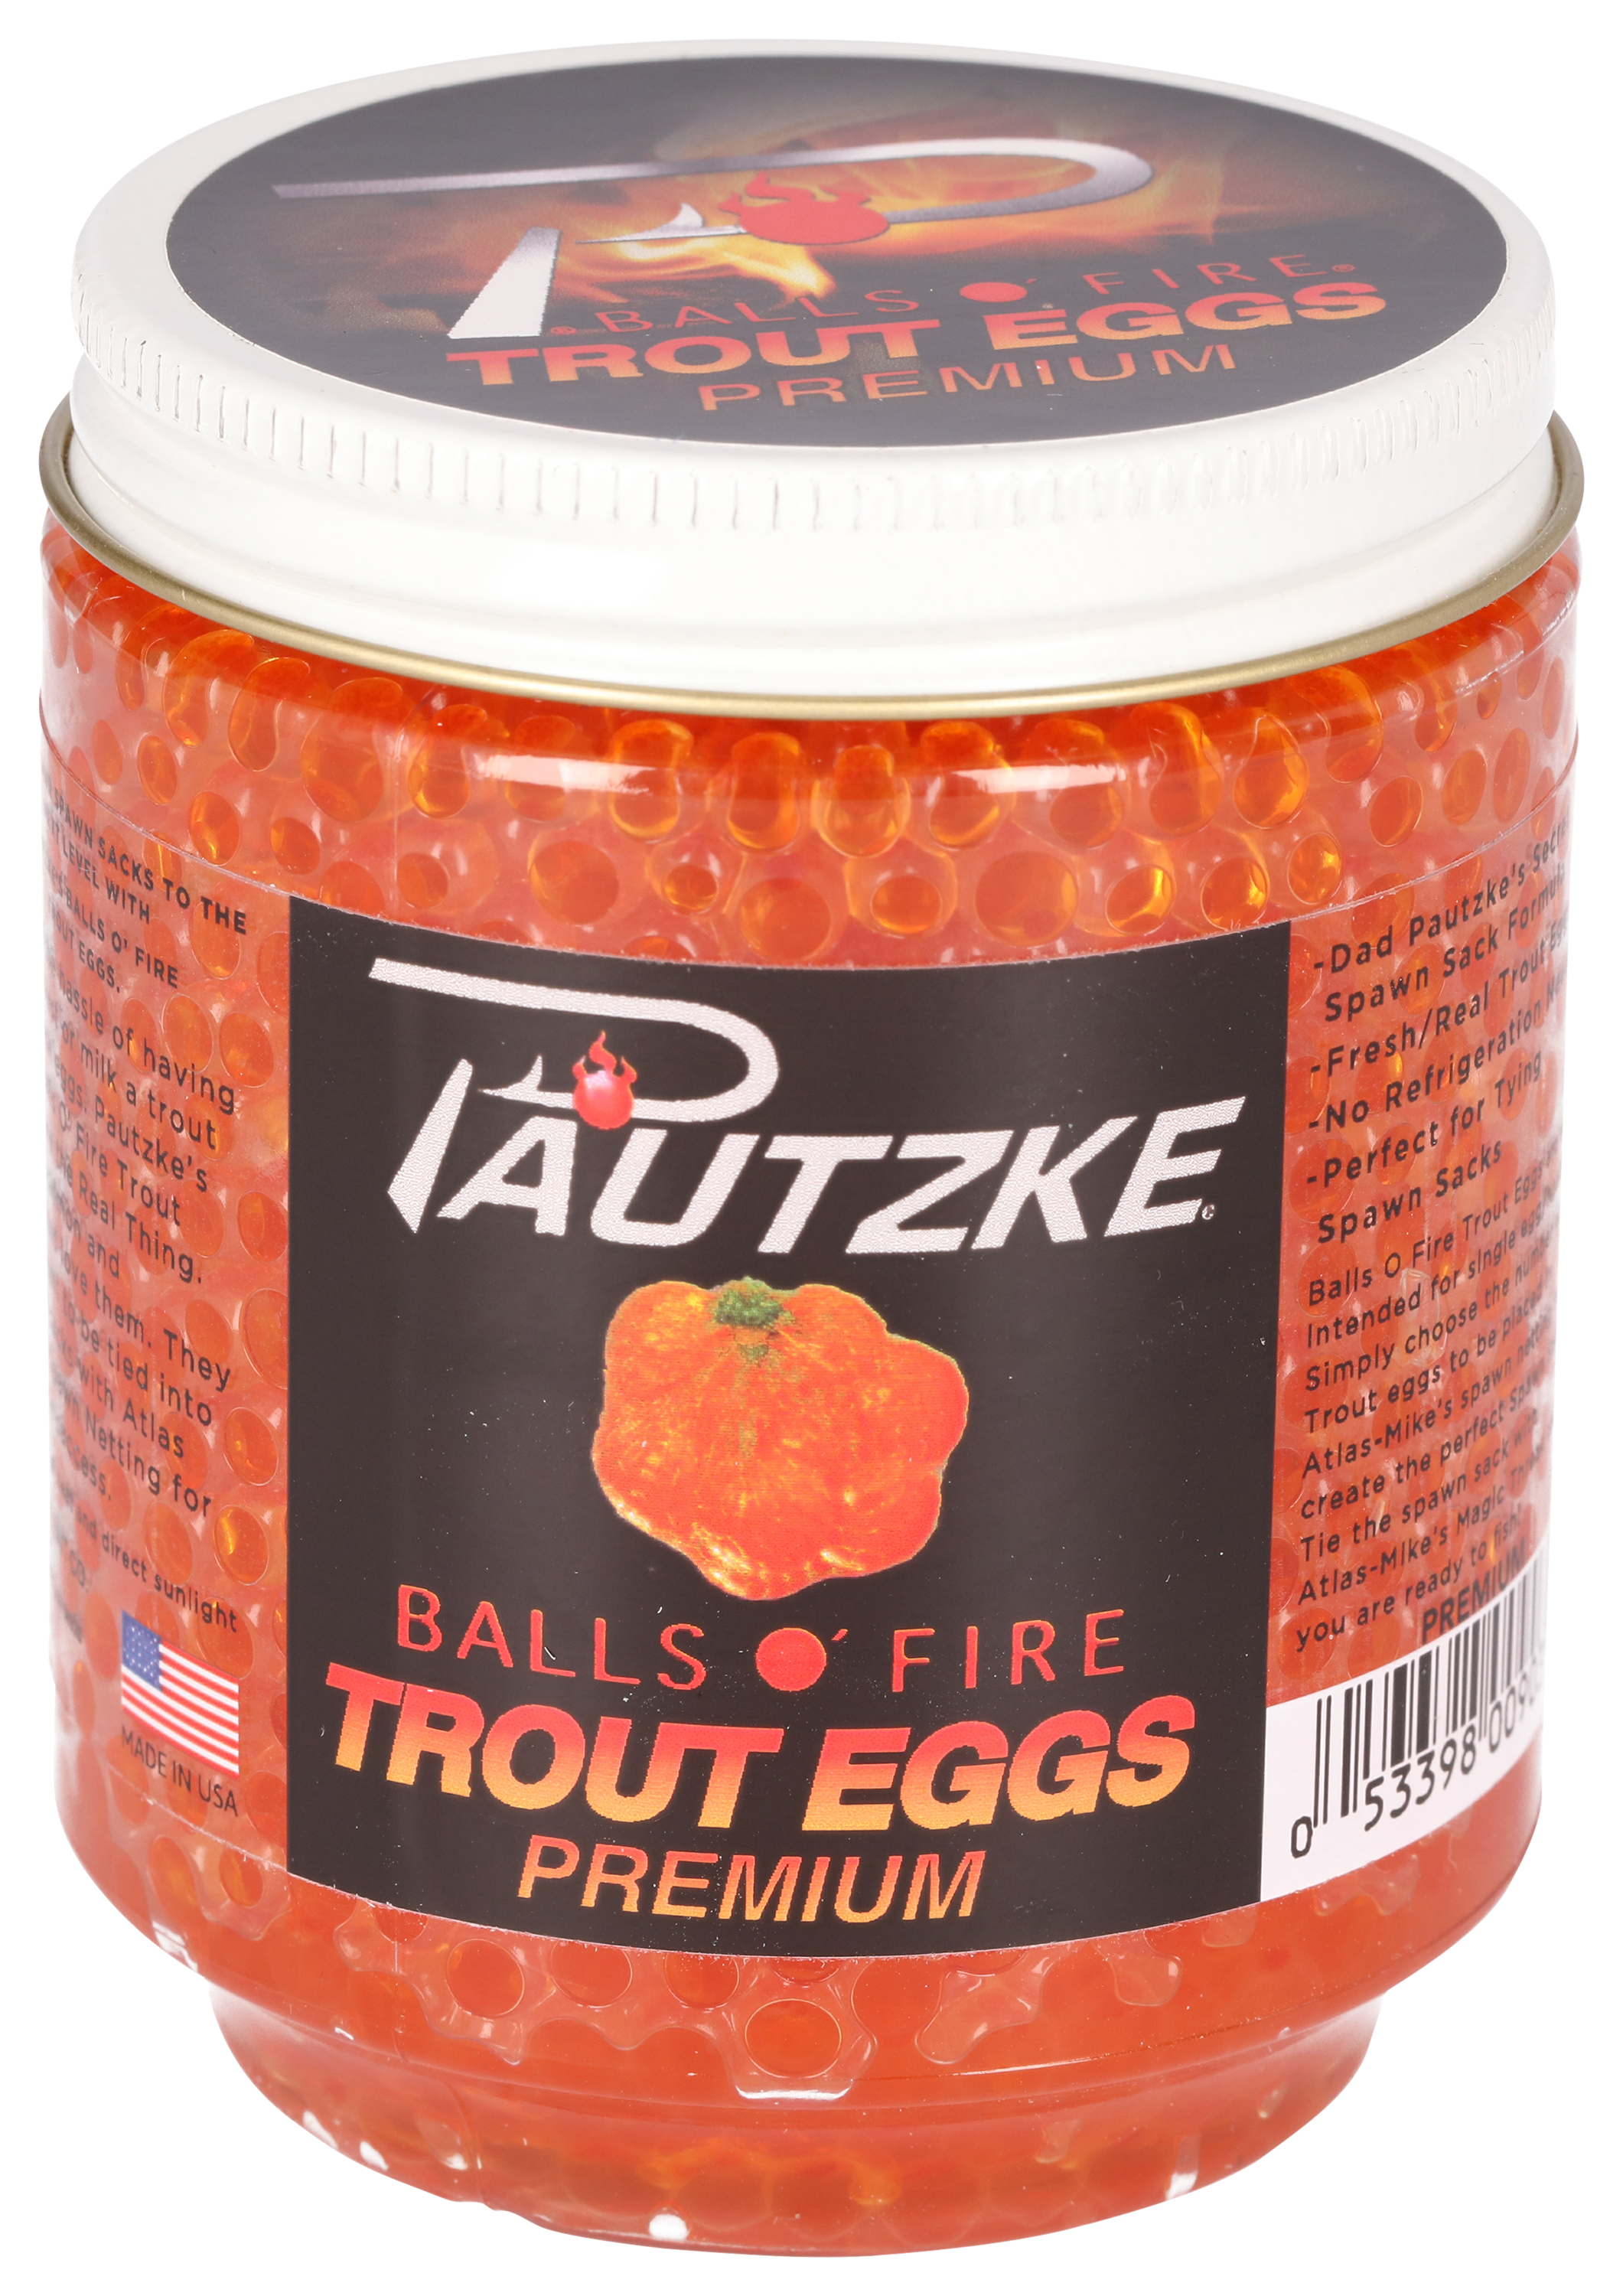 Pautzke Balls O' Fire Salmon Eggs